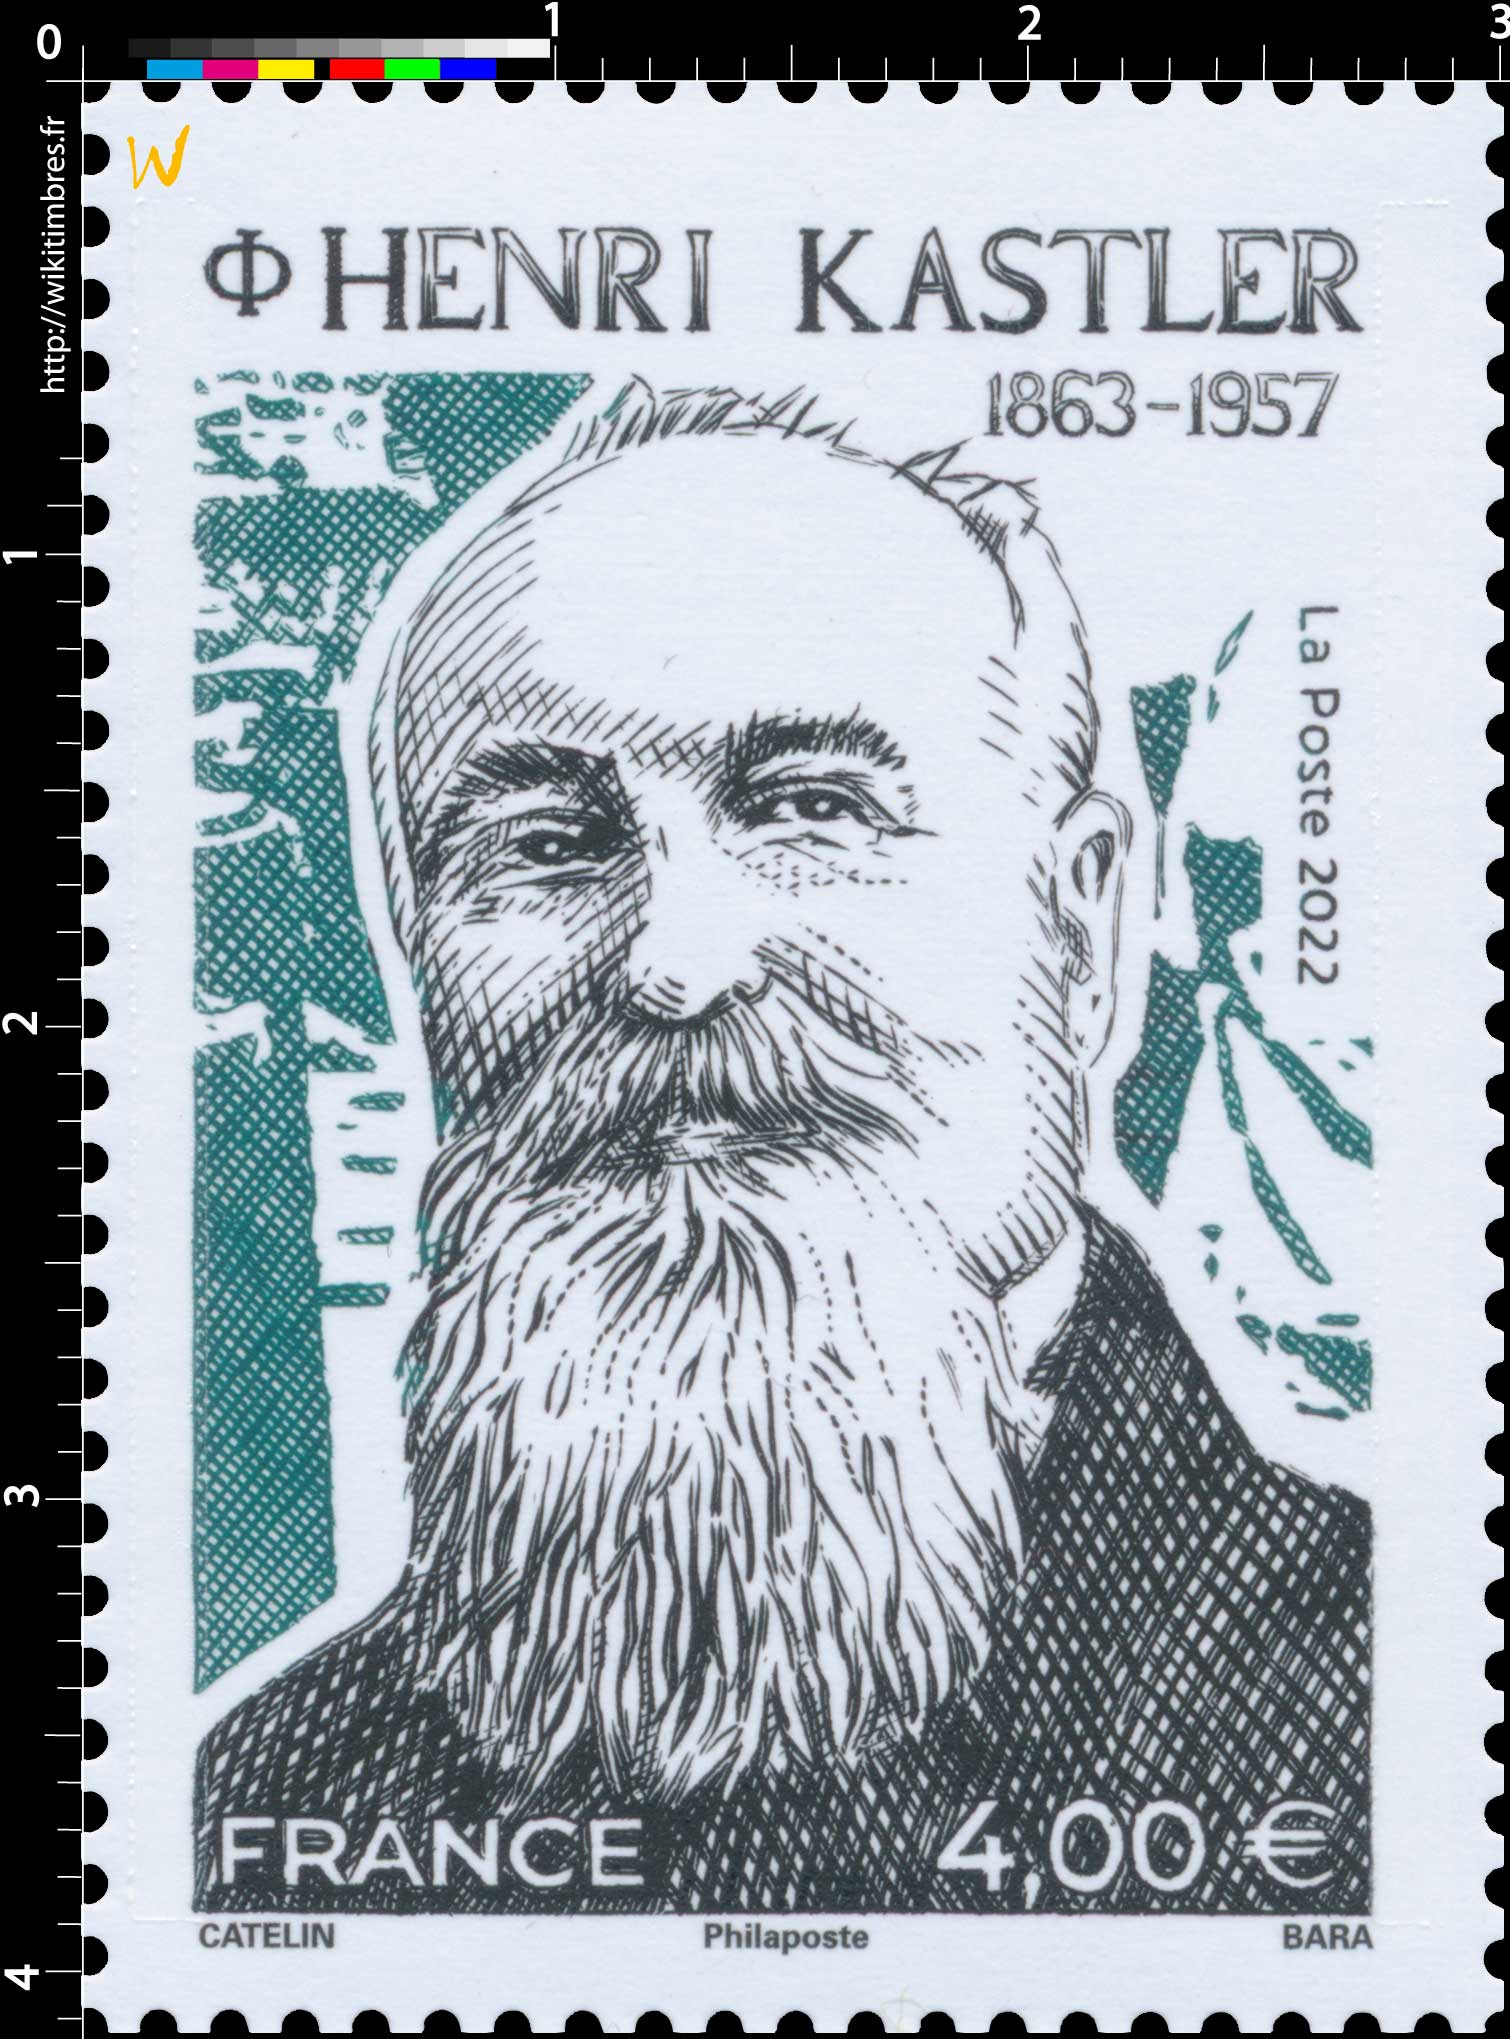 2022 HENRI KASTLER 1863 - 1957